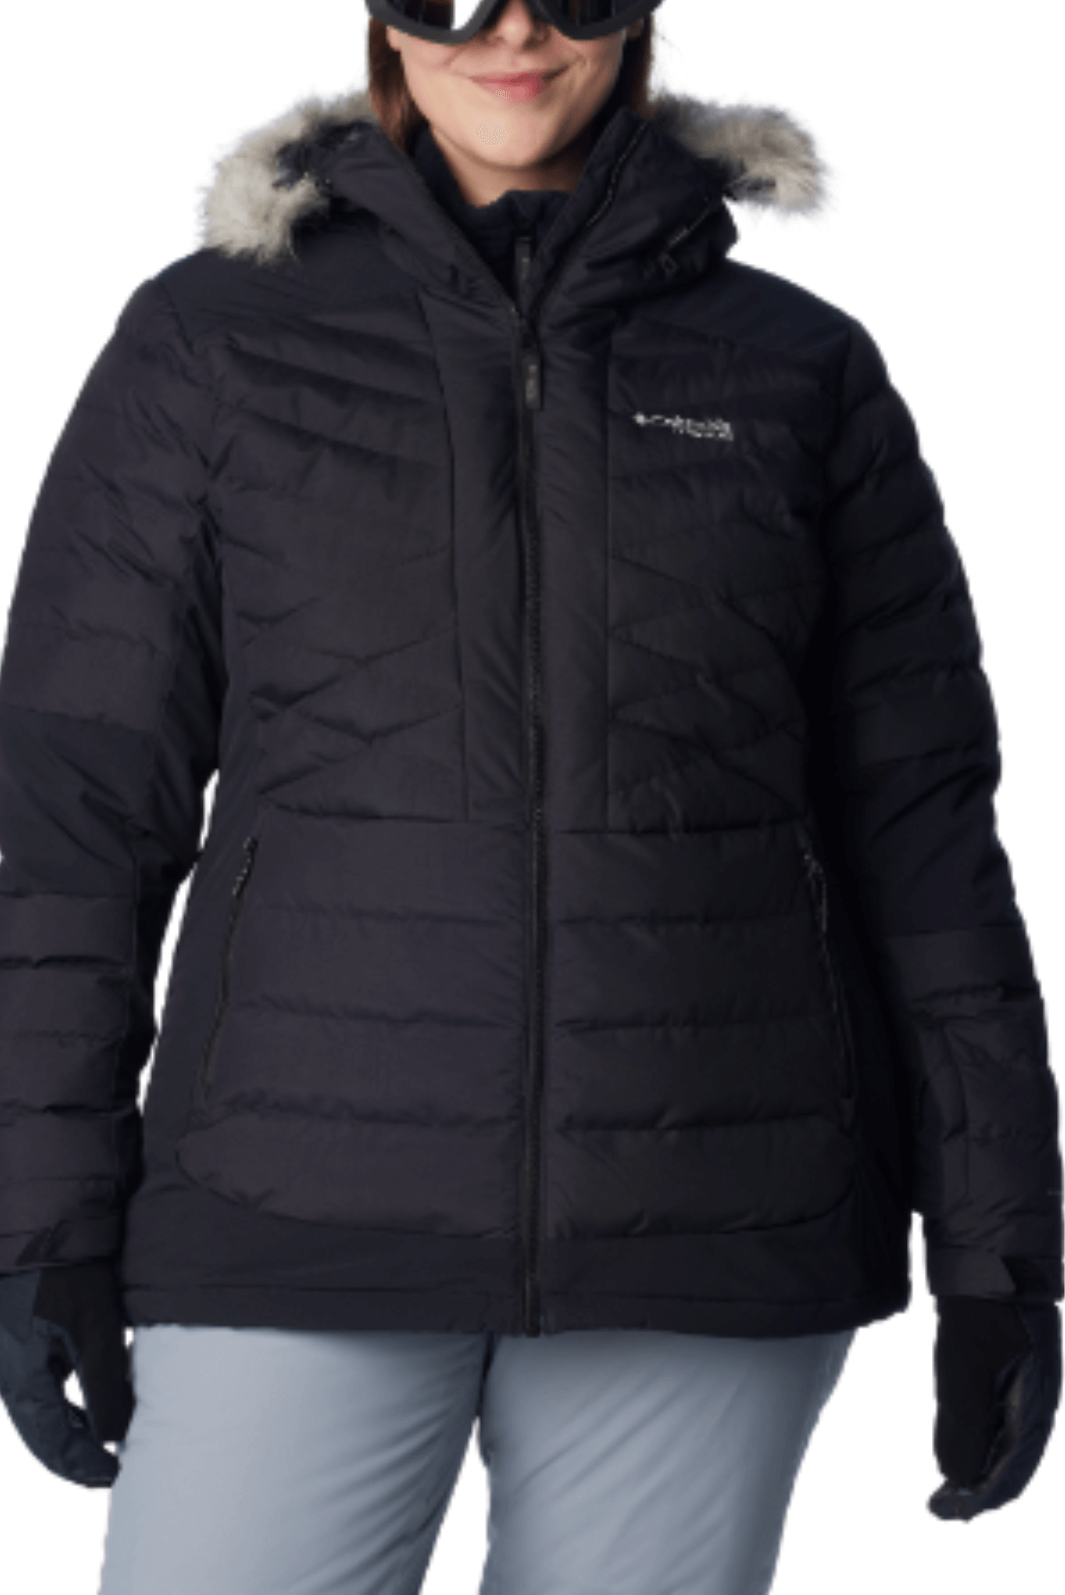 Women's Pike Lake™ II Long Jacket - Plus Size